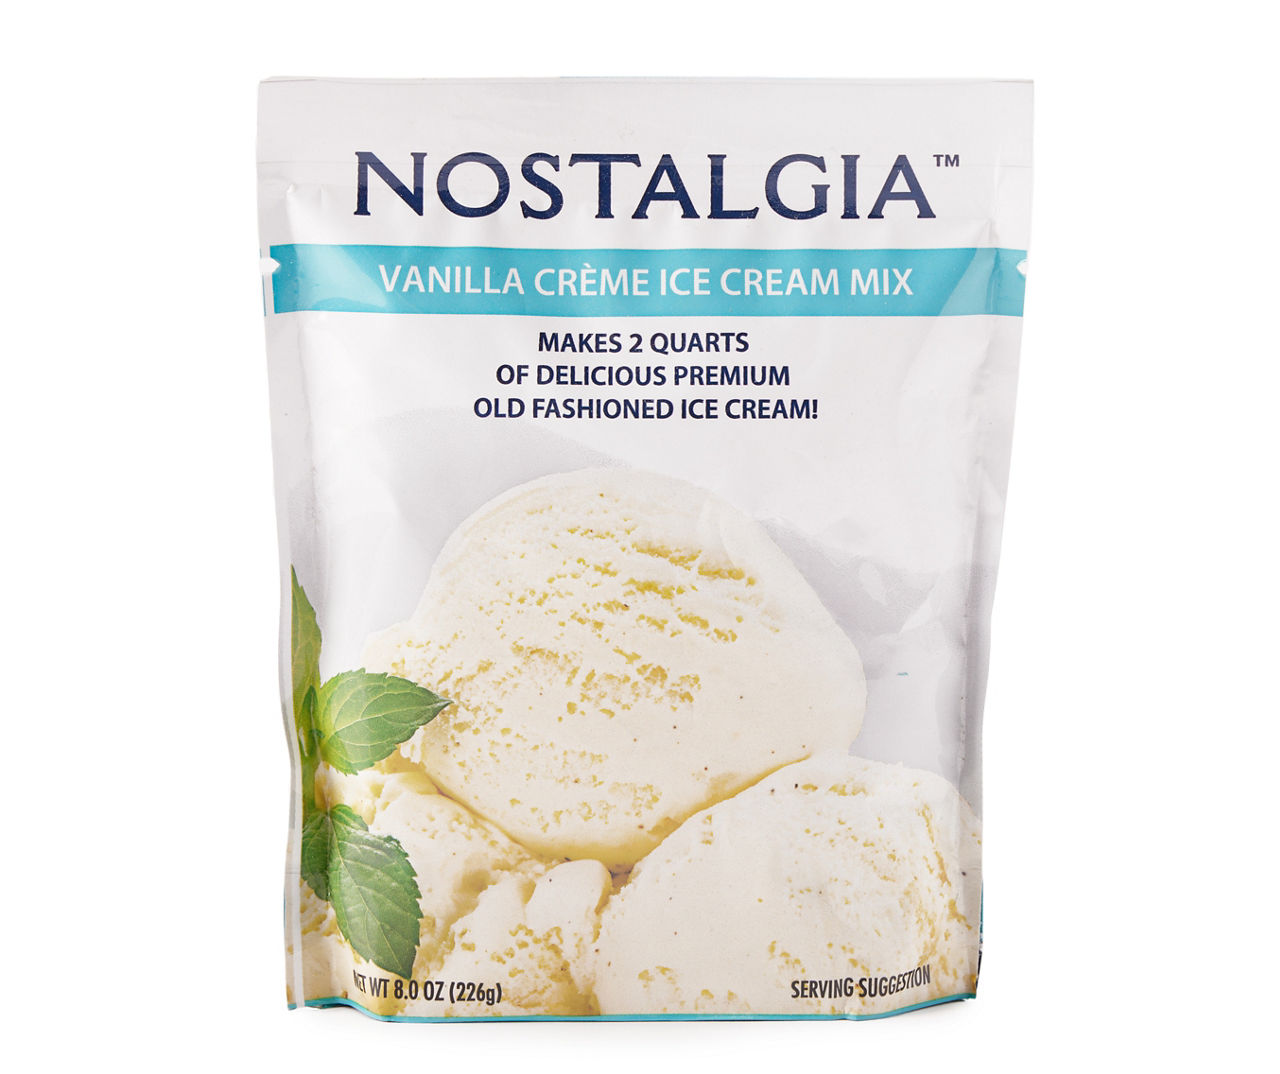 Nostalgia Vanilla Ice Cream Mix